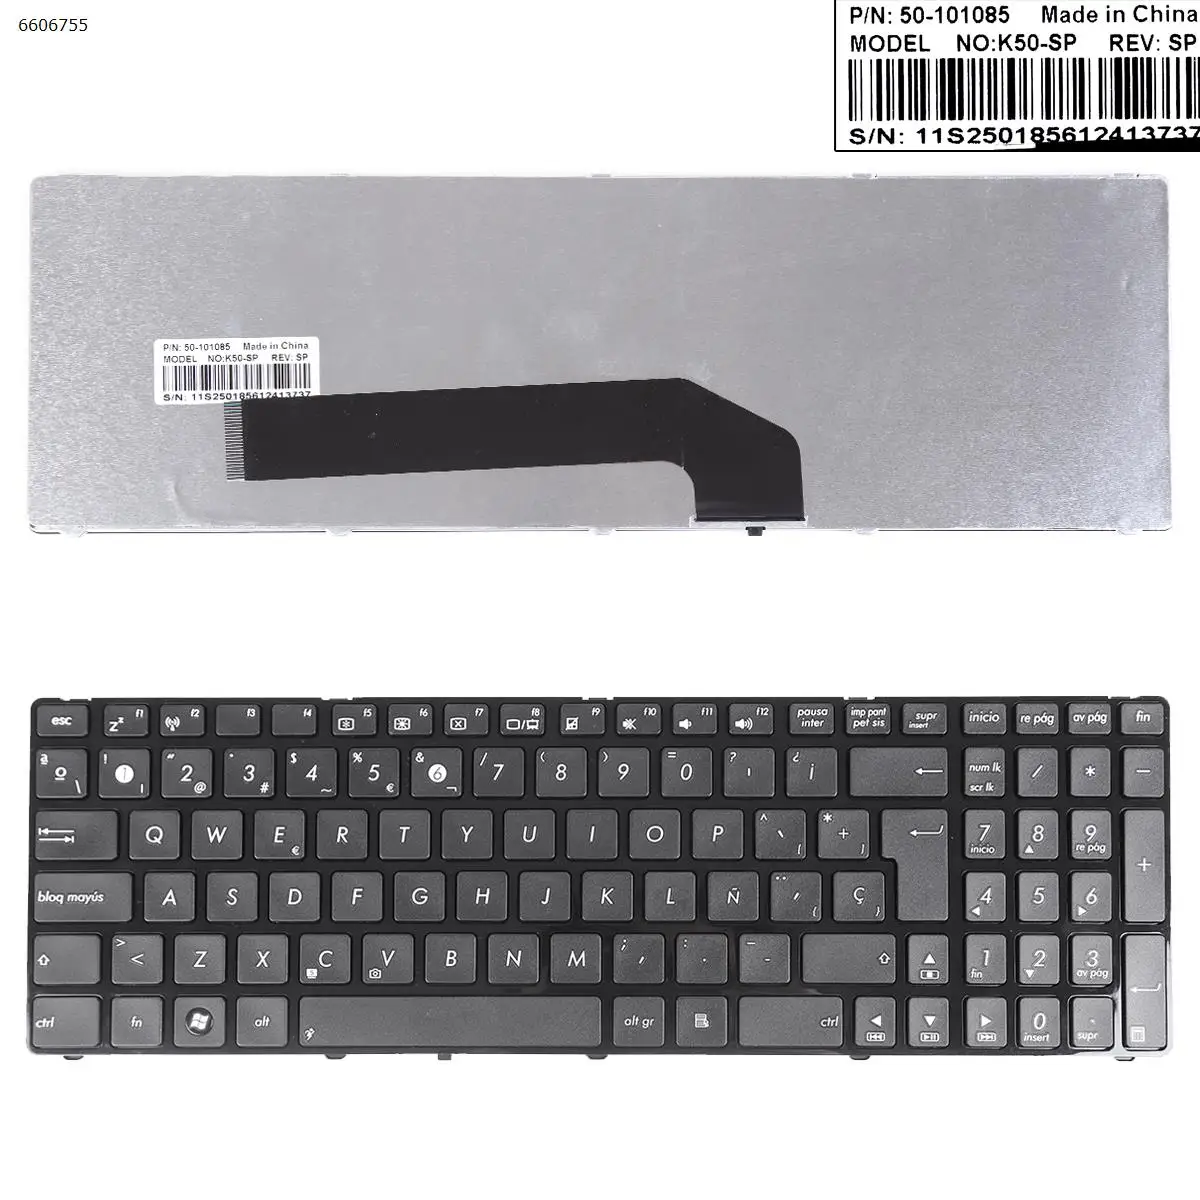 

SP Клавиатура для ноутбука ASUS K62 K62F X5DIJ X5DIL X5EA X5EAC X5EAE X66 X66I X66IC P50 P50IJ X5DAB X5DAD X5DAF, глянцевая черная рамка